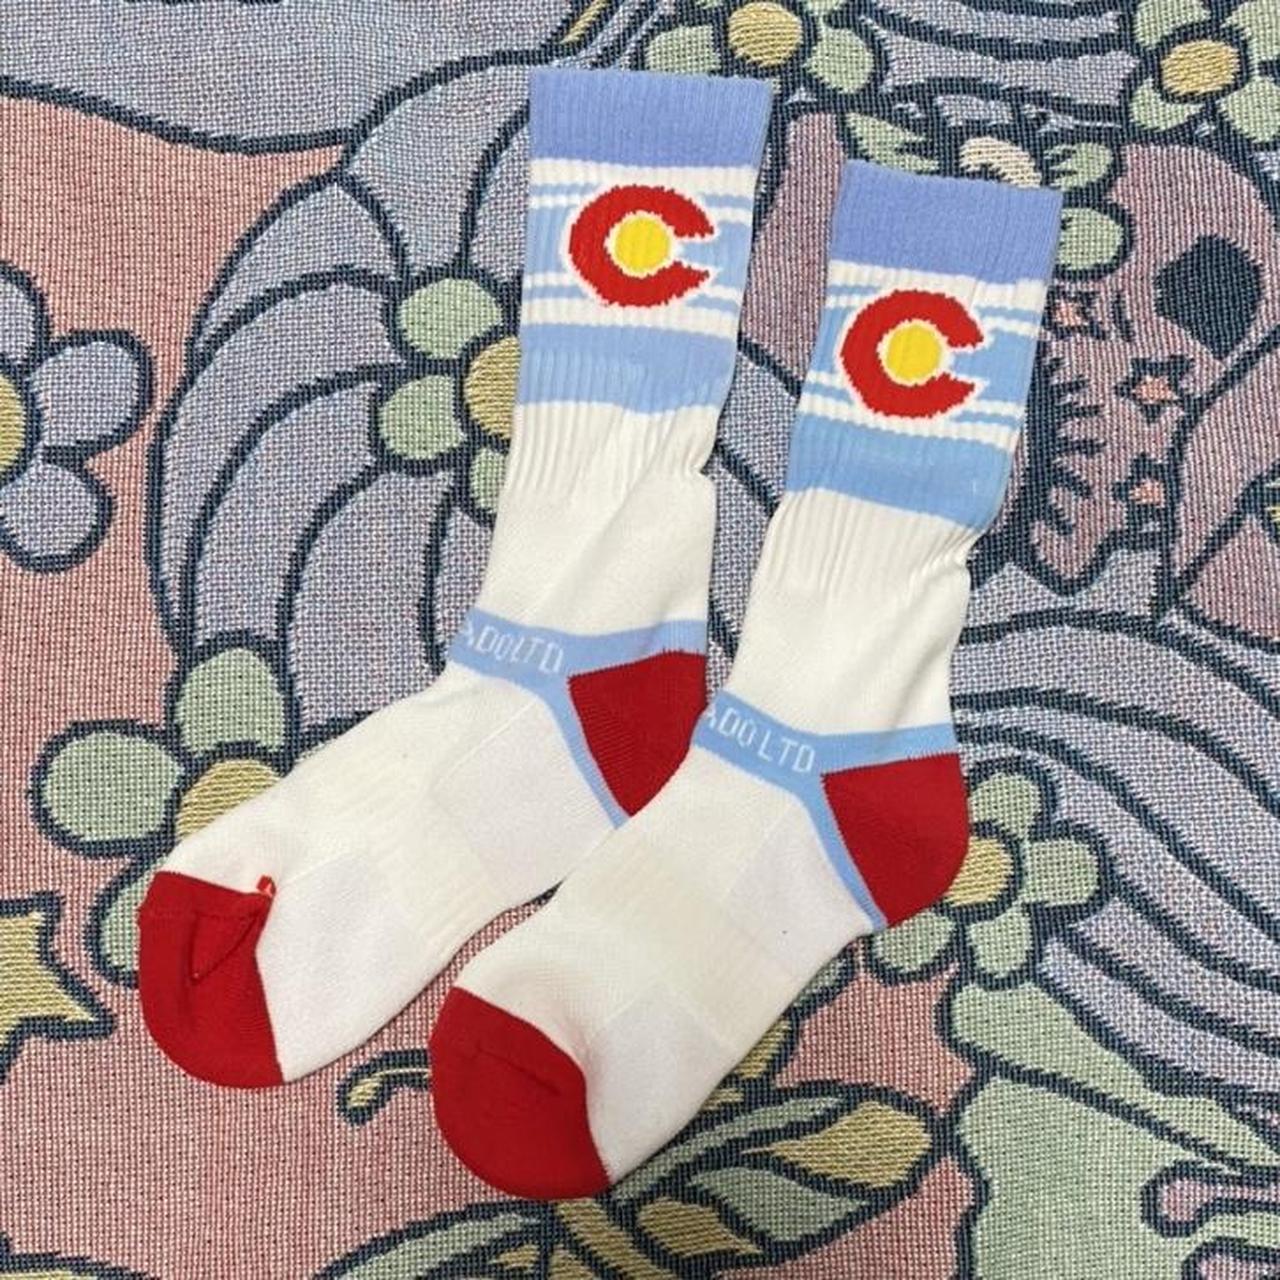 Product Image 2 - Long Colorado athletic socks!⛷

#skiing #winter